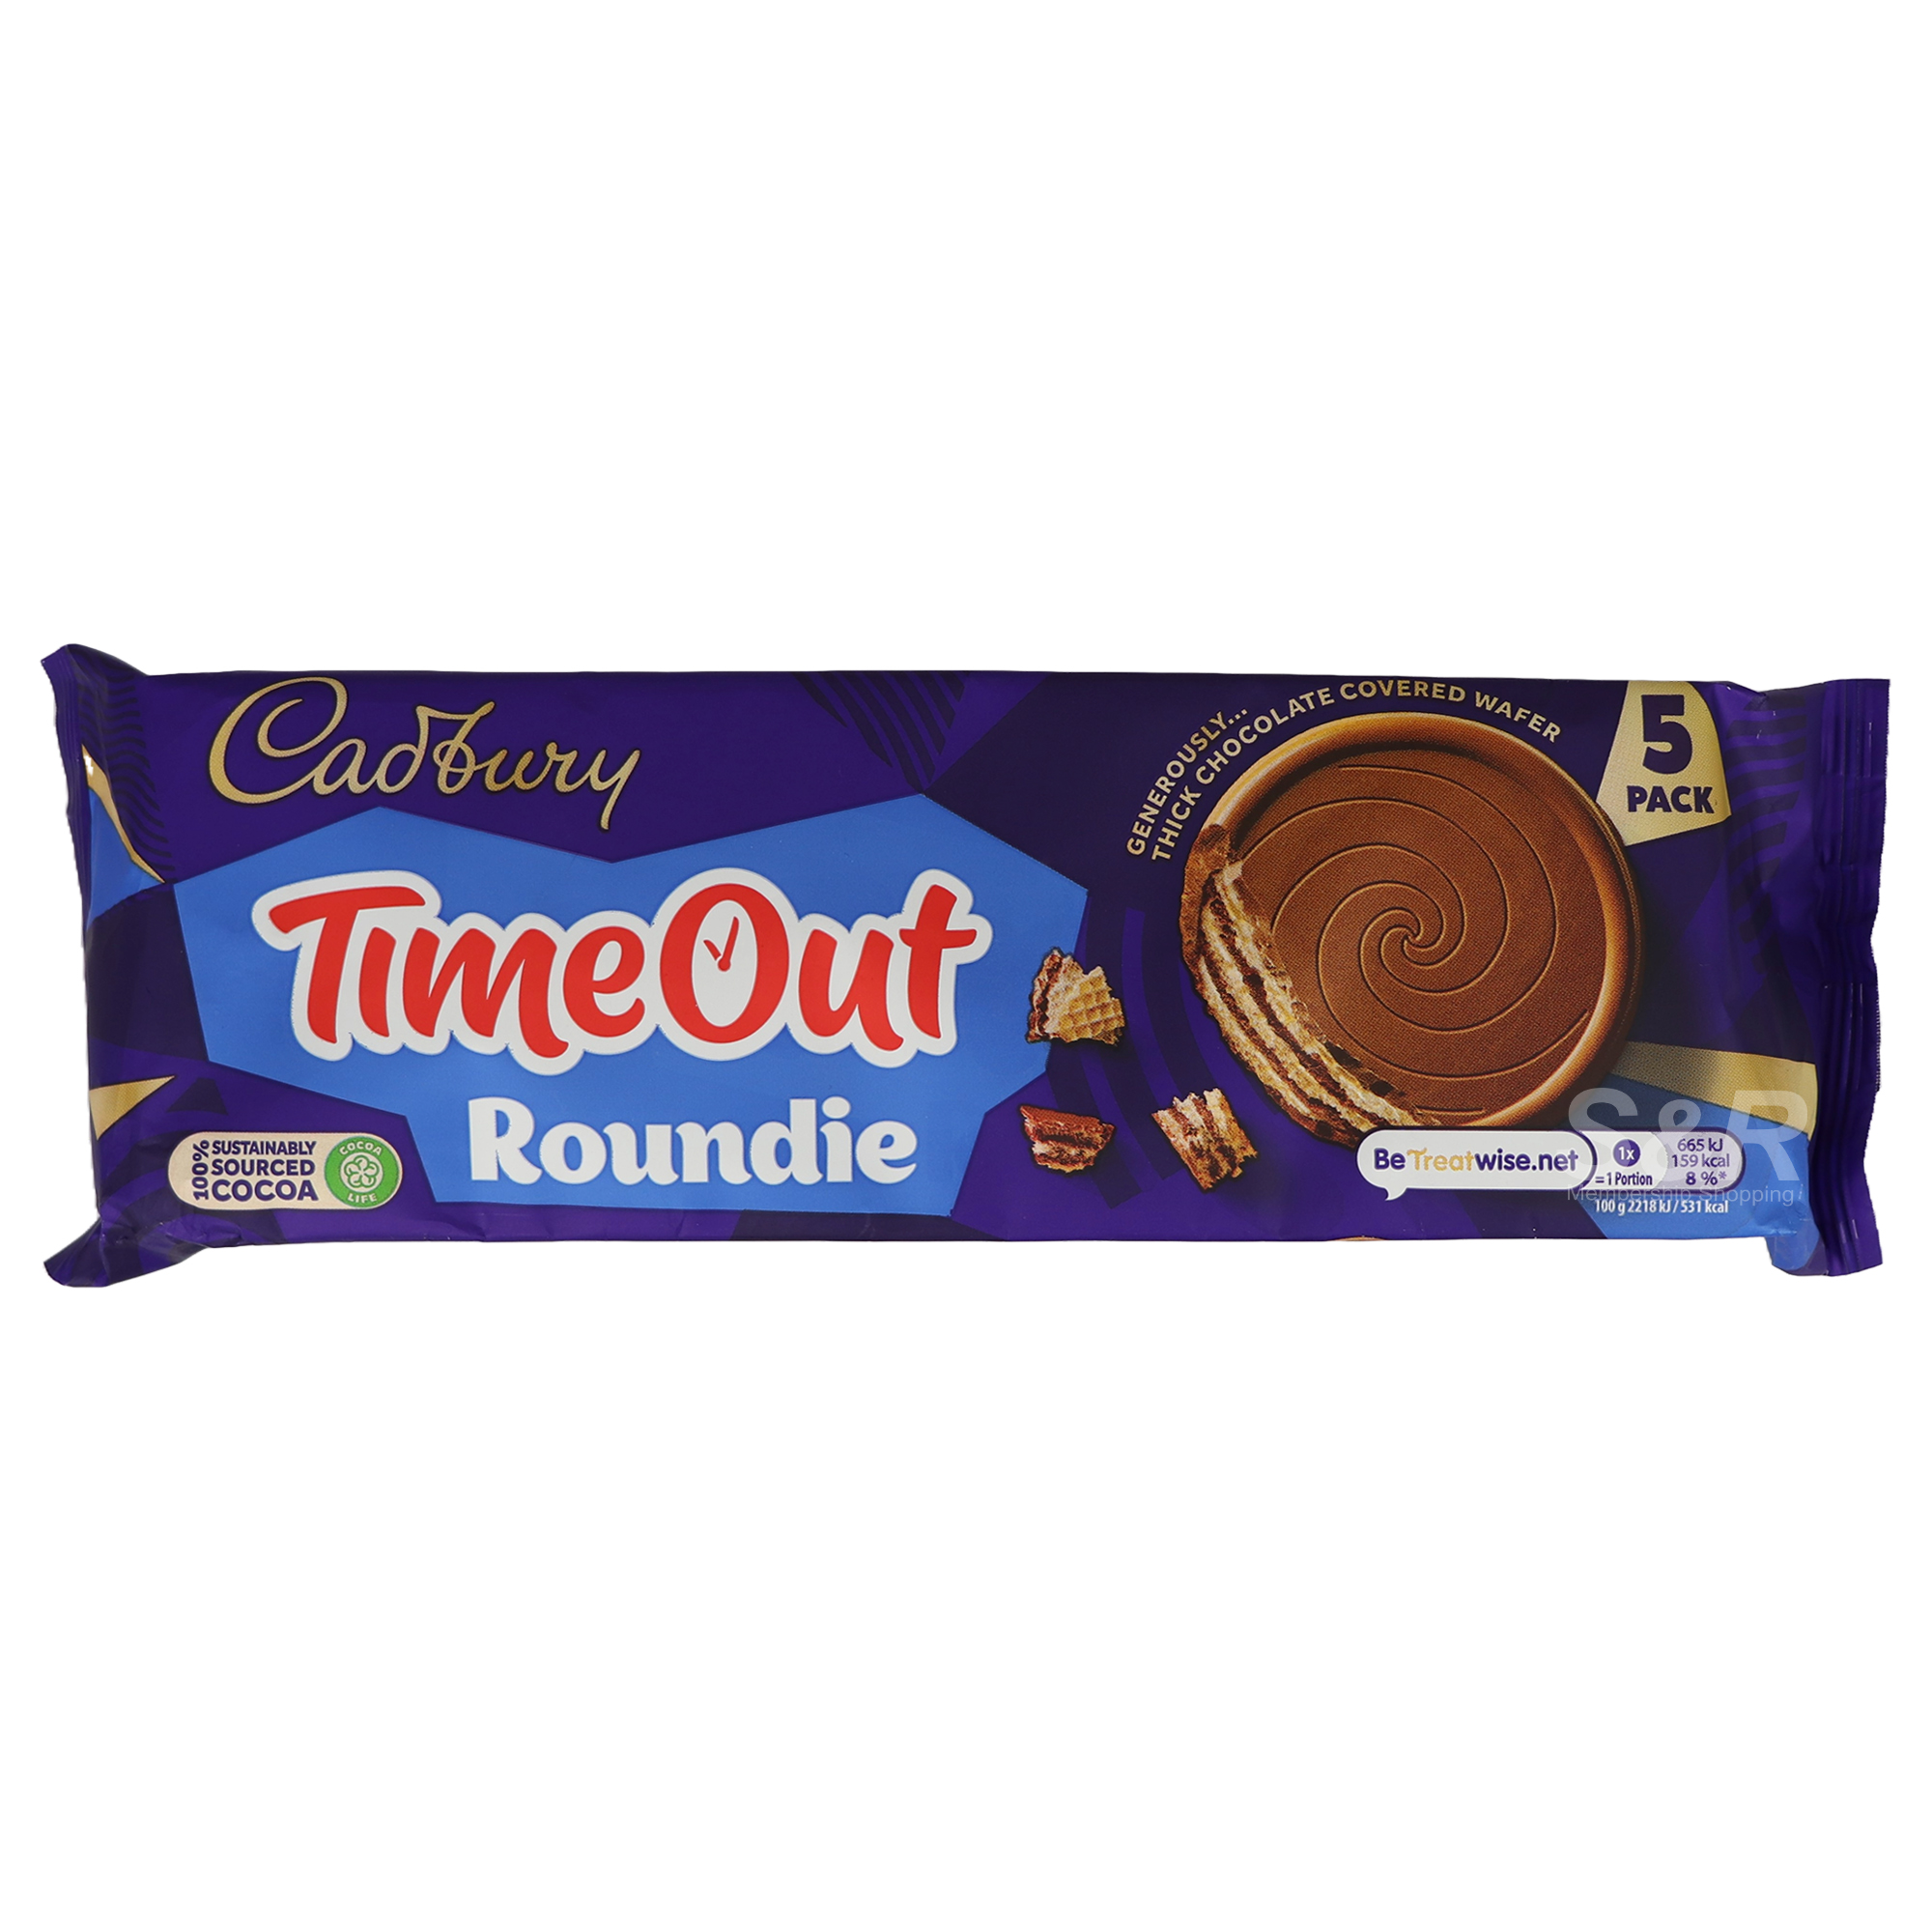 Cadbury Timeout Roundie 5pcs